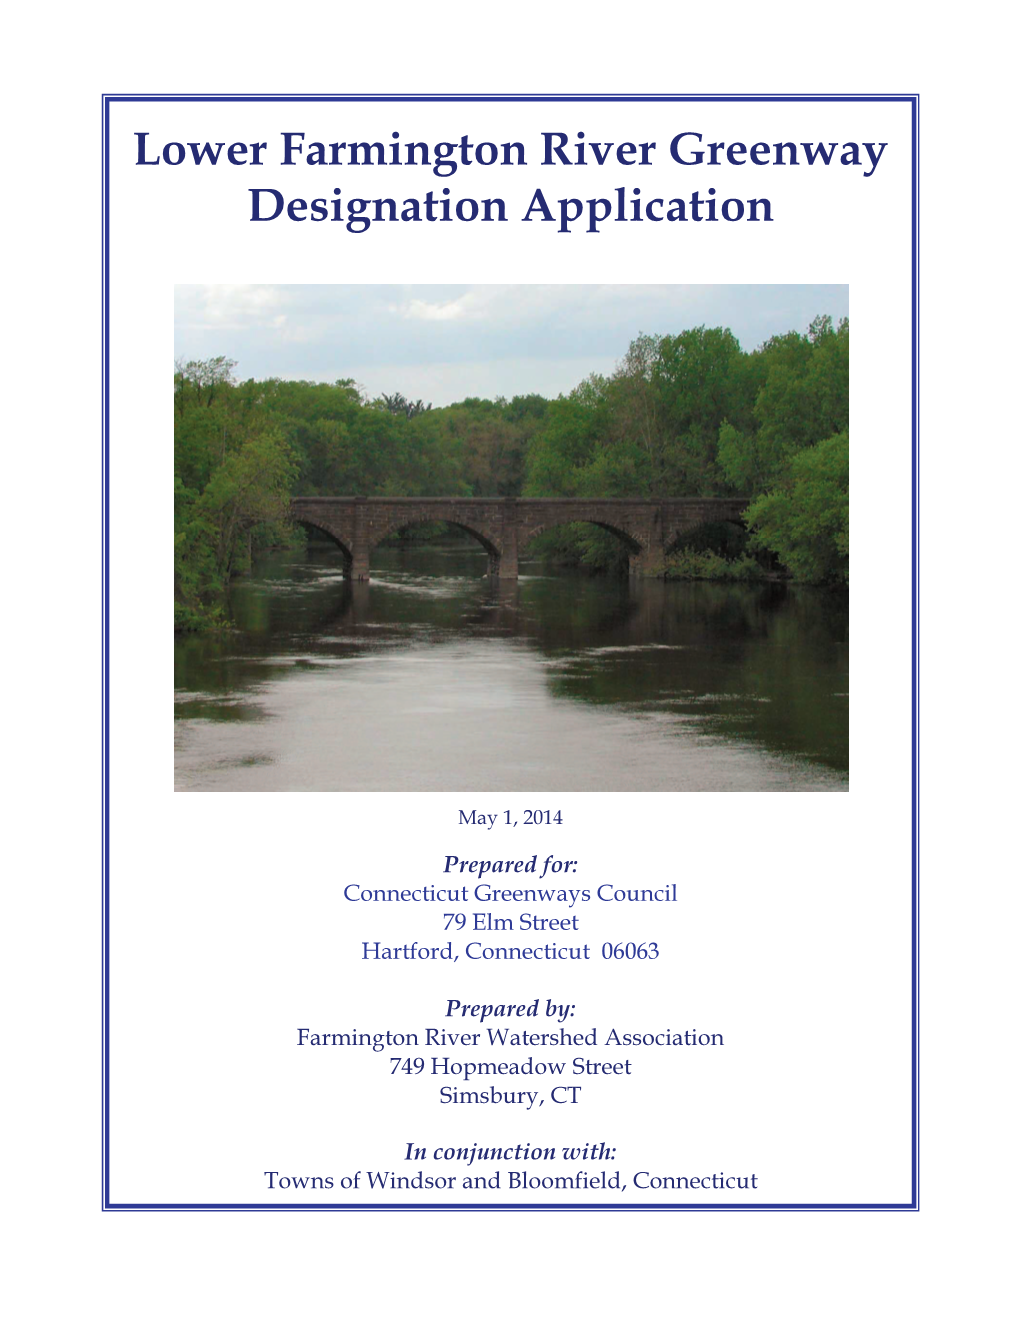 Lower Farmington River Greenway Nomination Application